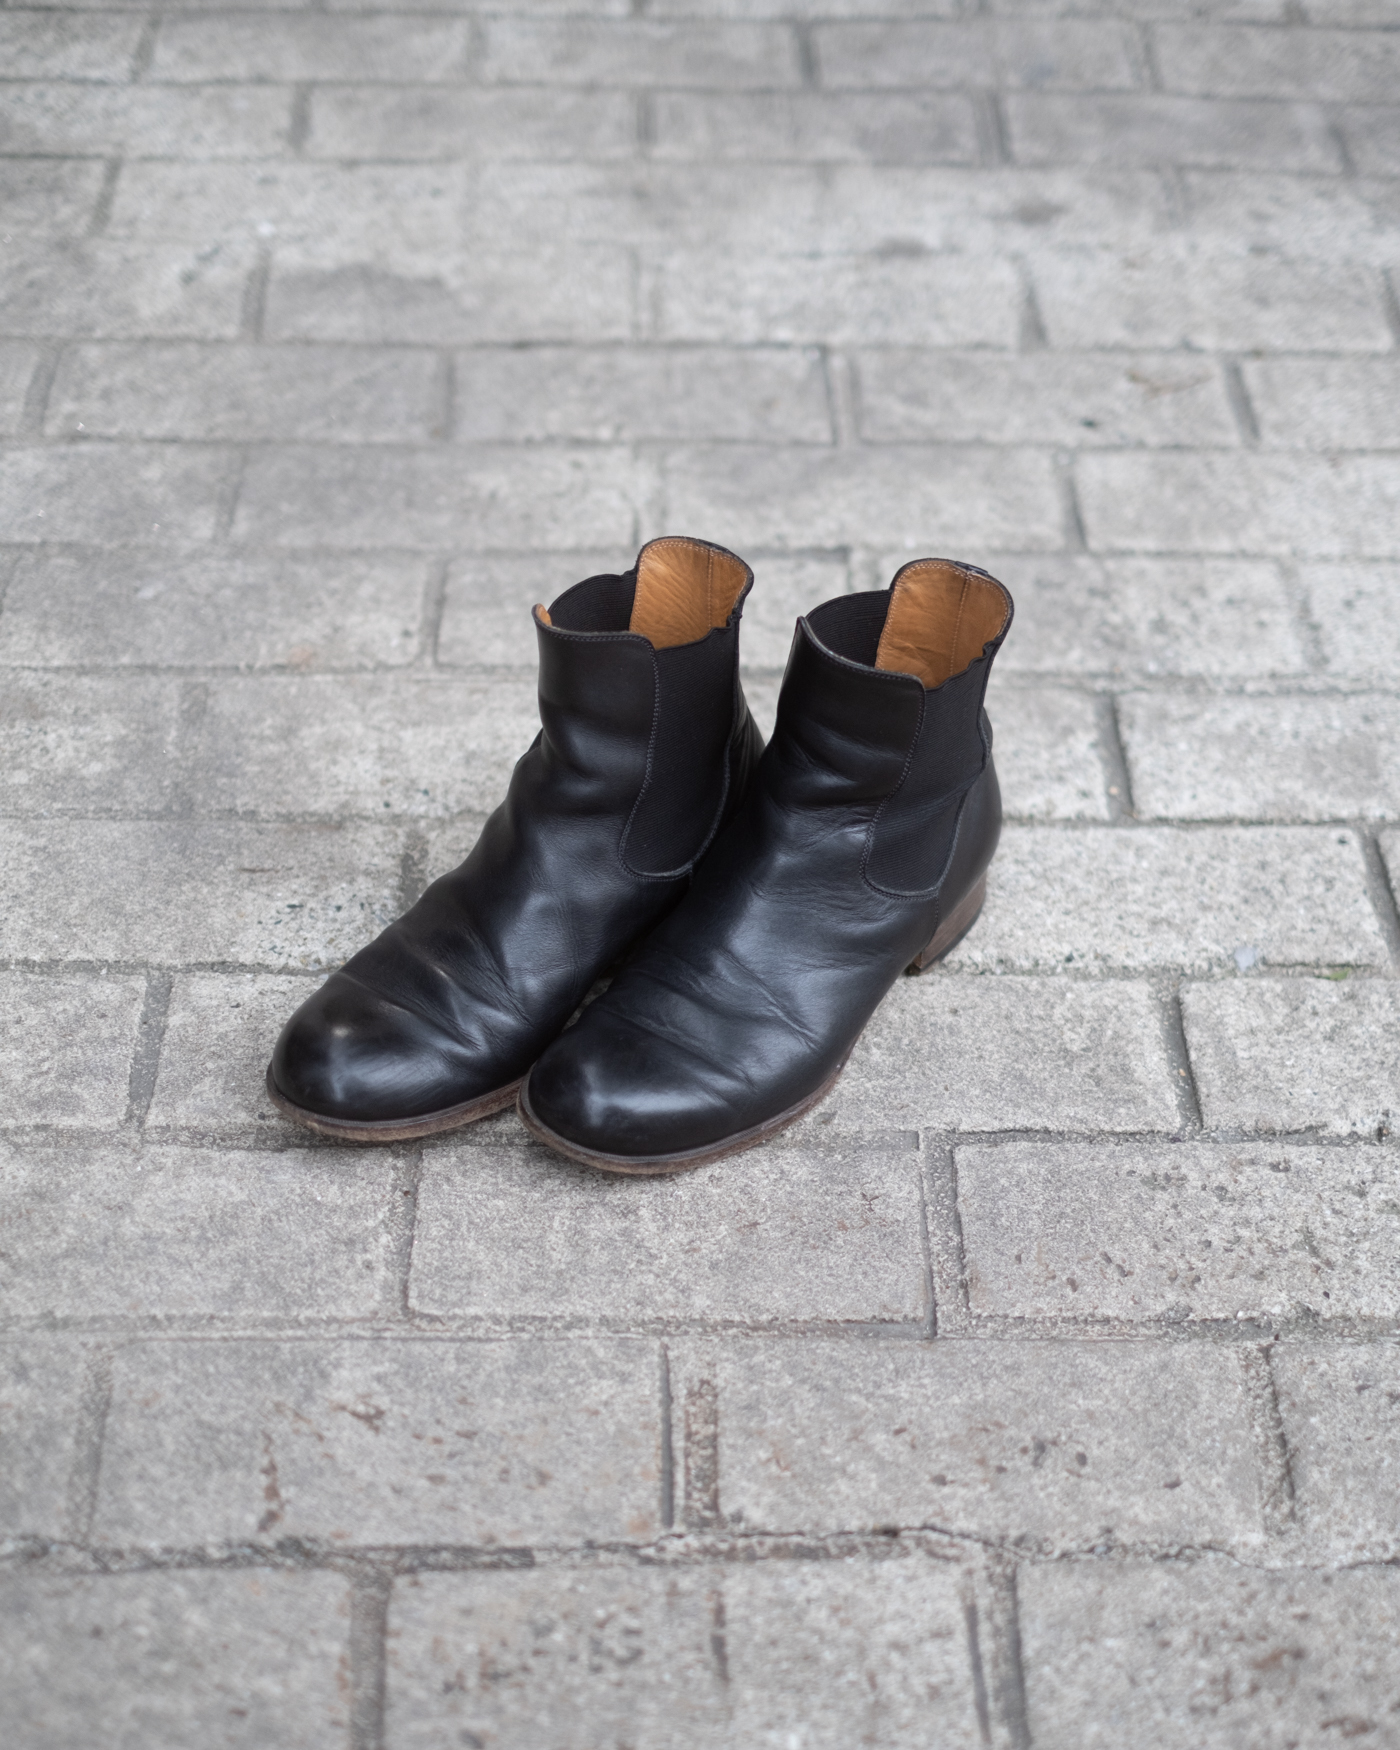 forme フォルメ 革靴 ブーツ rainy www.cotepotager.ch